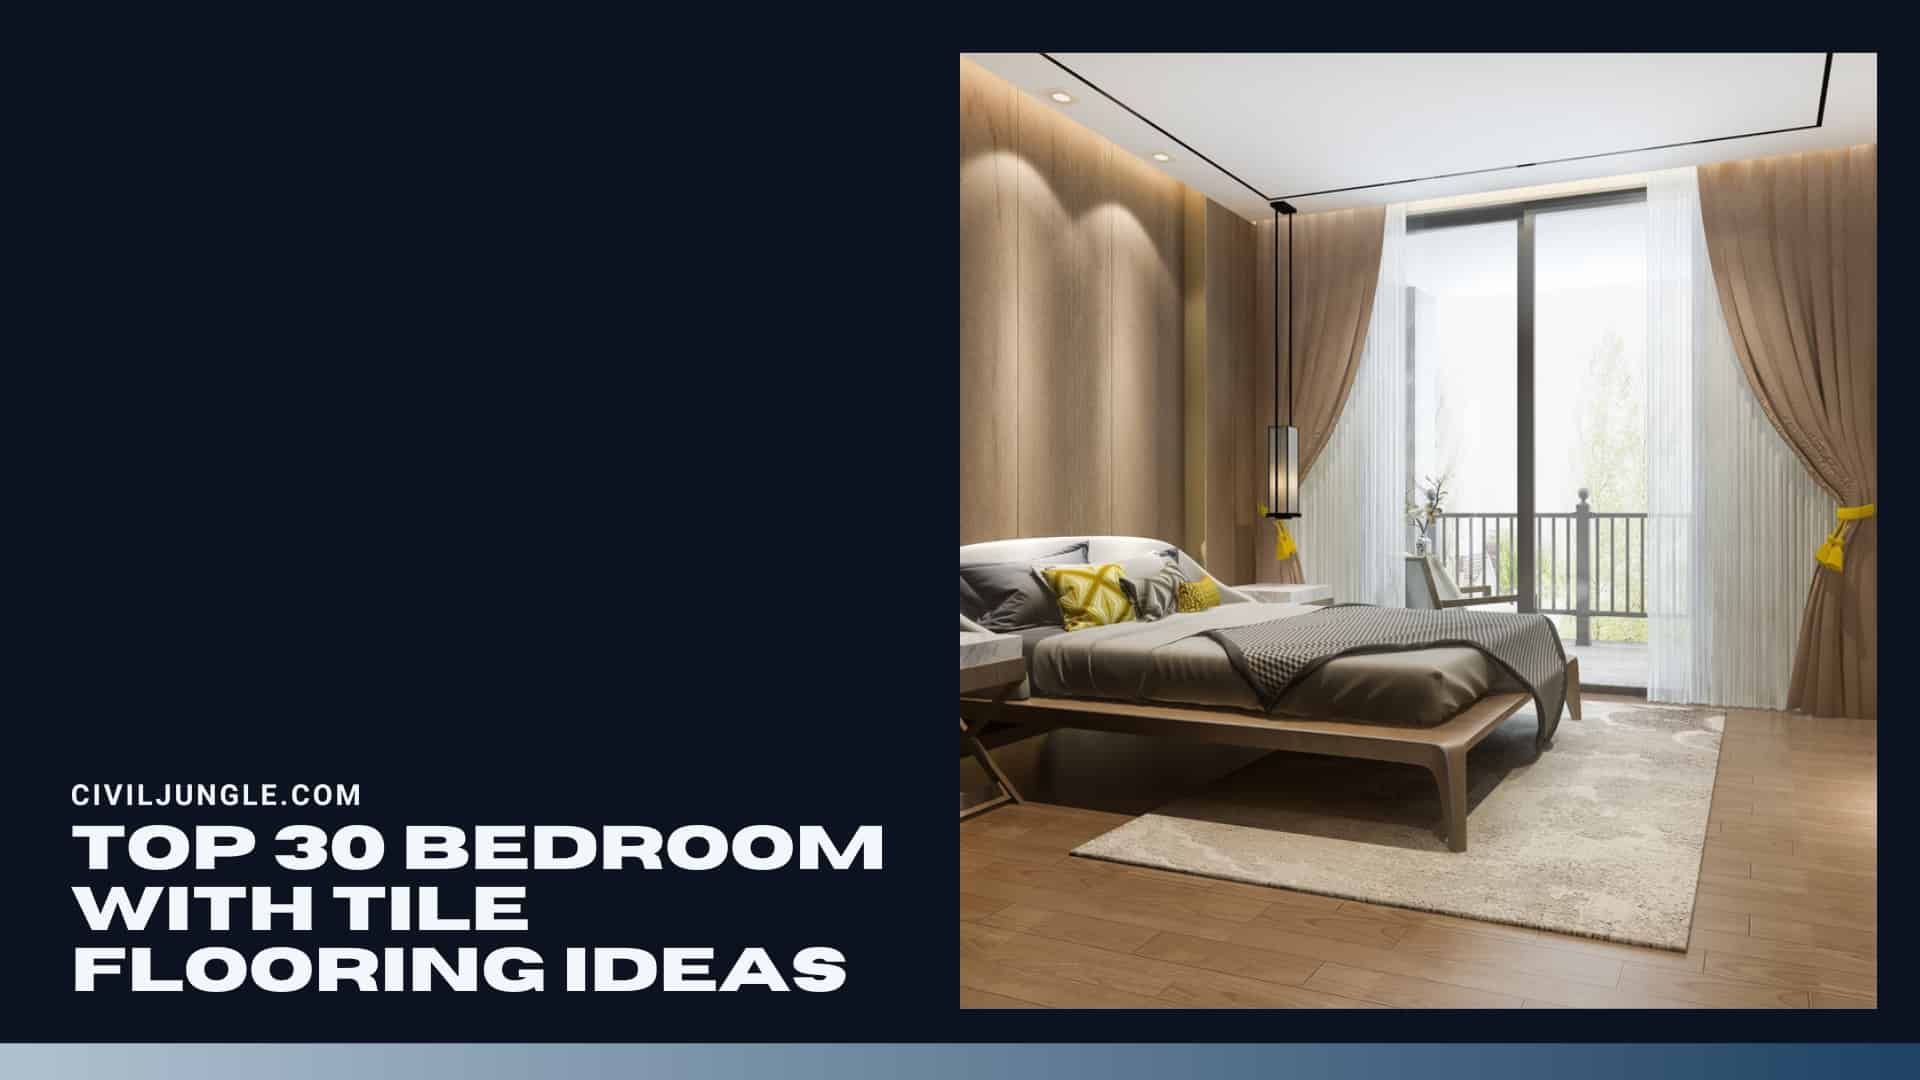 Top 30 Bedroom with Tile Flooring Ideas